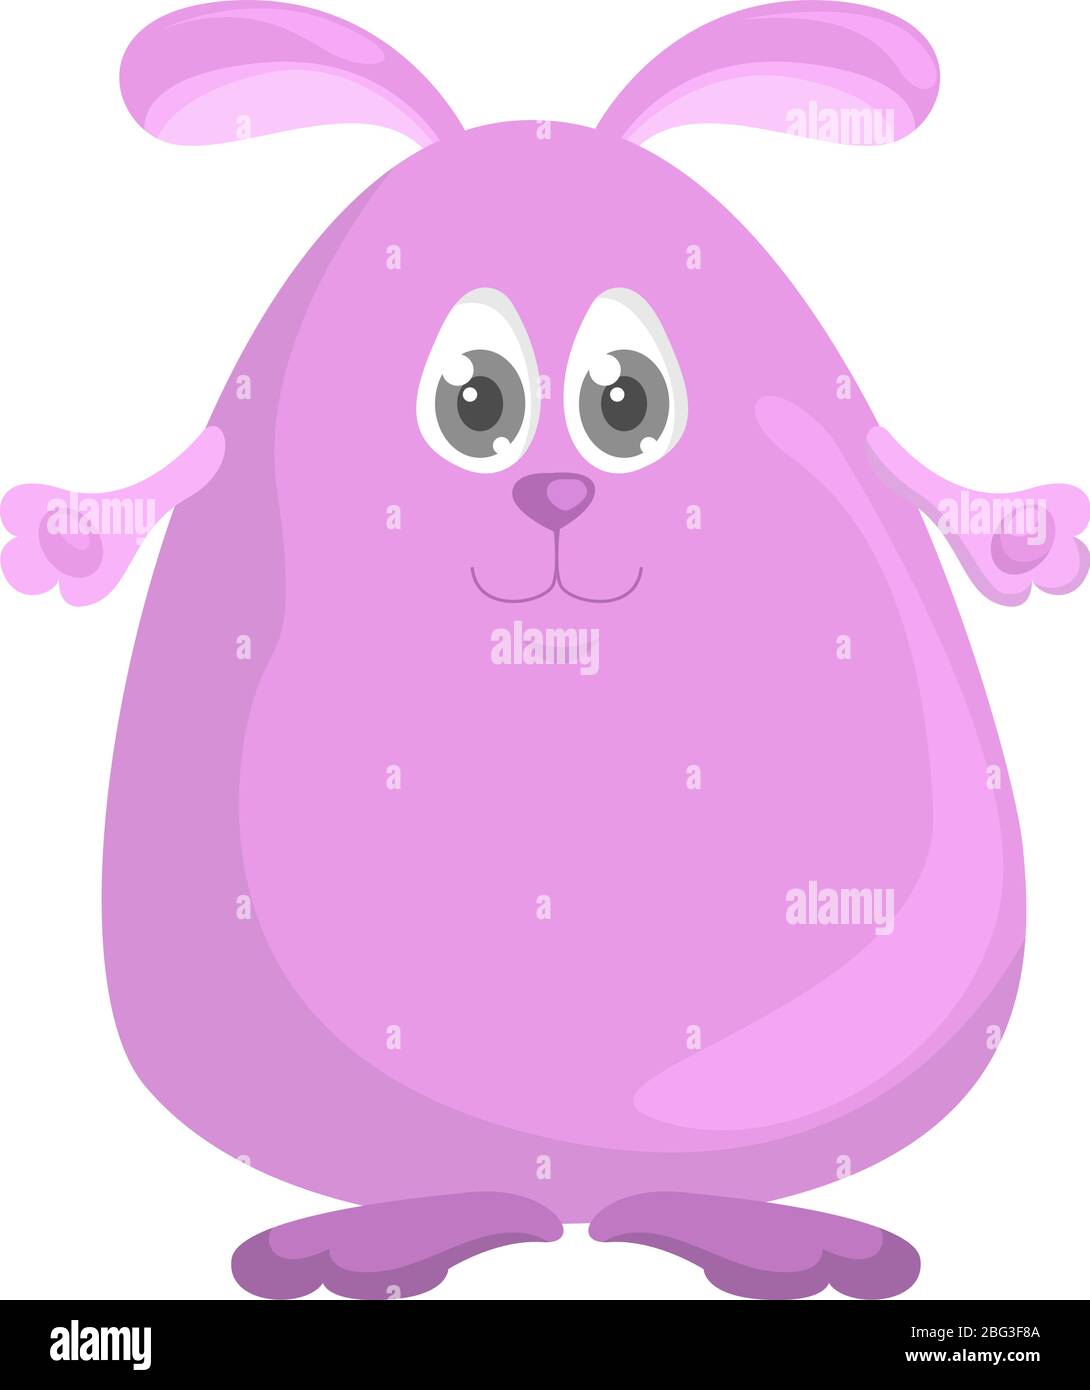 https://c8.alamy.com/comp/2BG3F8A/fat-rabbit-illustration-vector-on-white-background-2BG3F8A.jpg